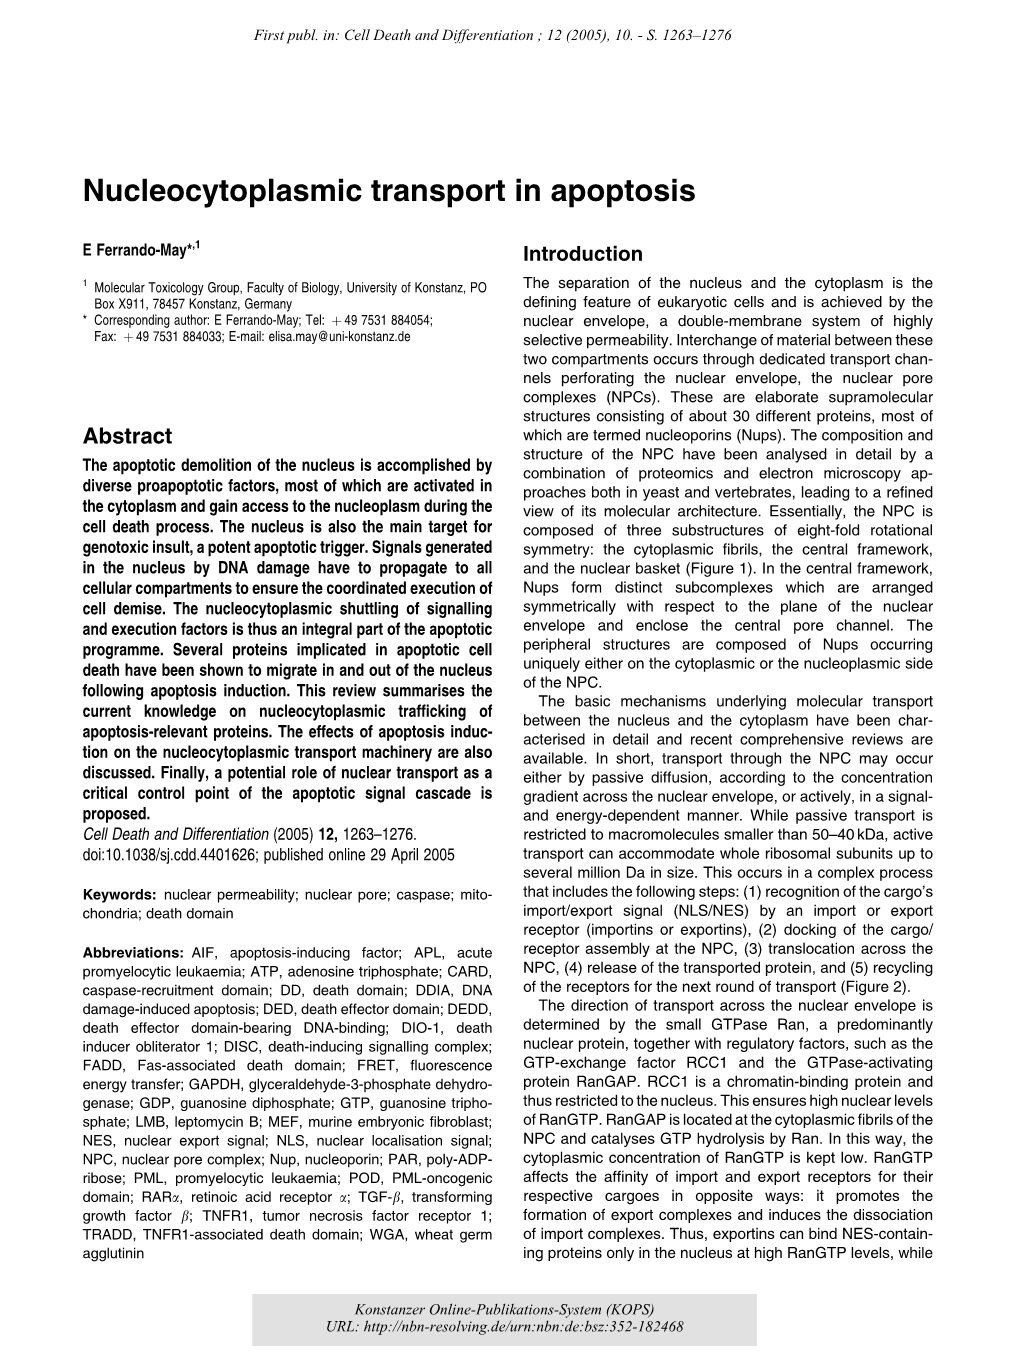 Nucleocytoplasmic Transport in Apoptosis